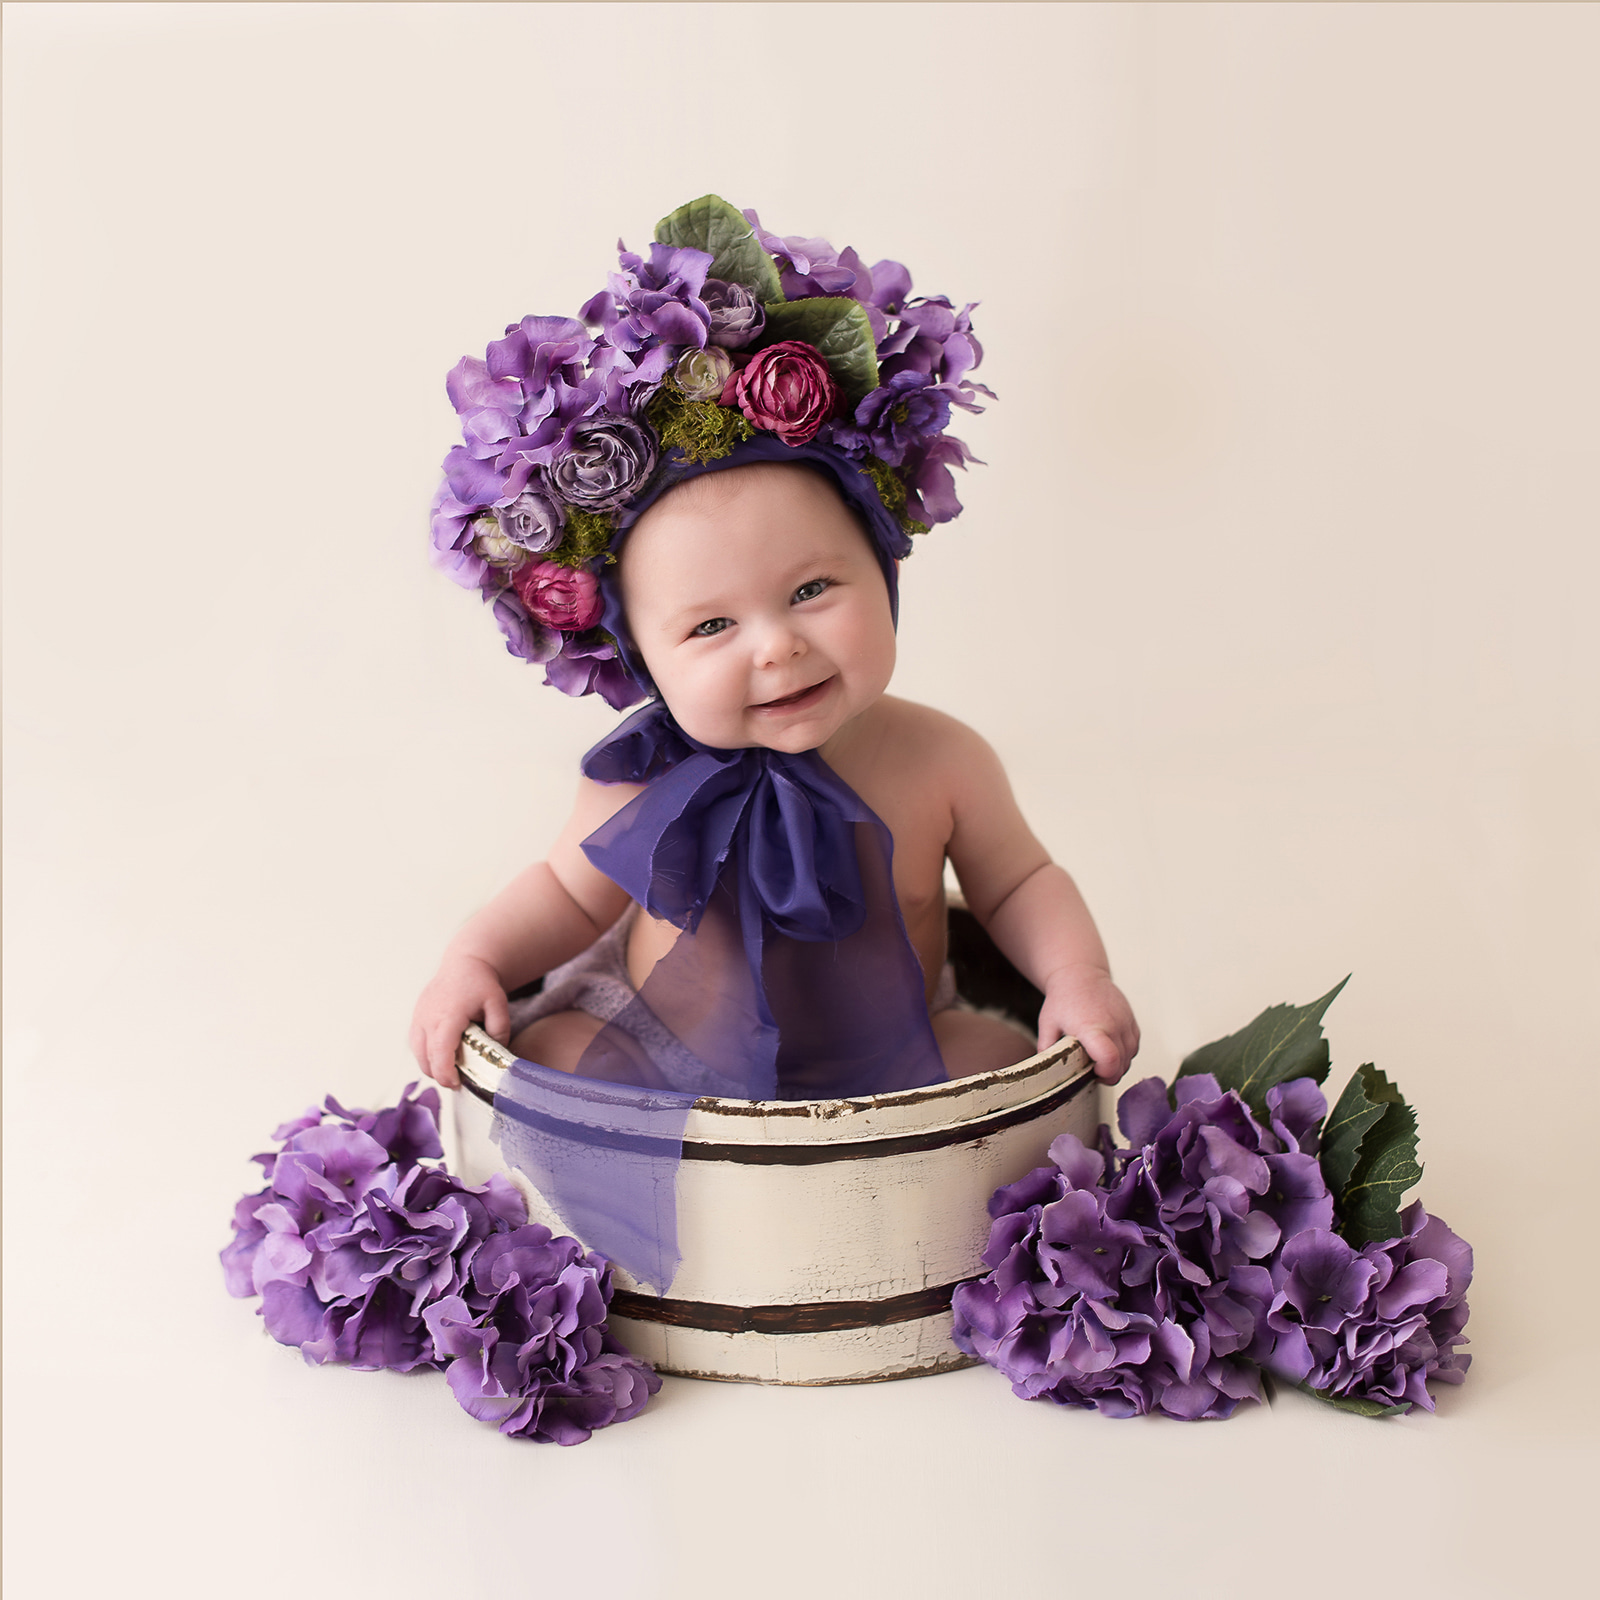 baby girl in purple flower hat sitting in a wooden tub